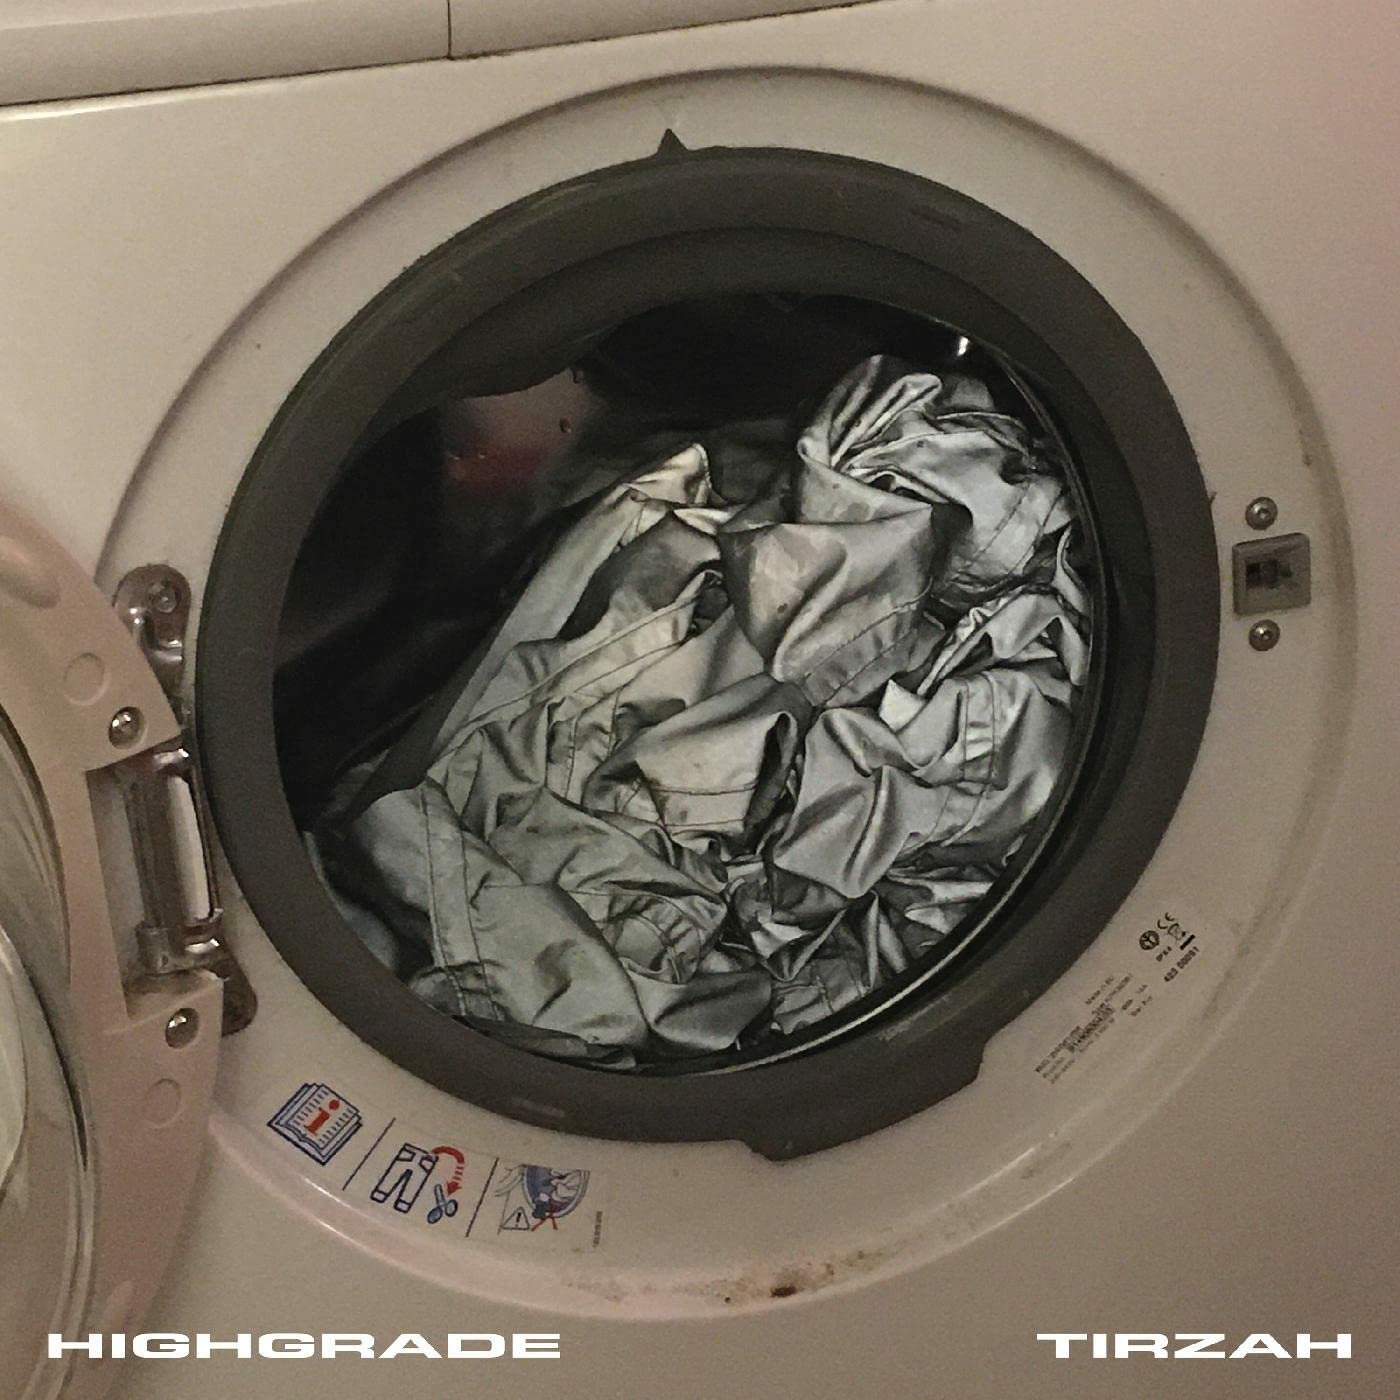 TIRZAH - HIGHGRADE, Vinyl